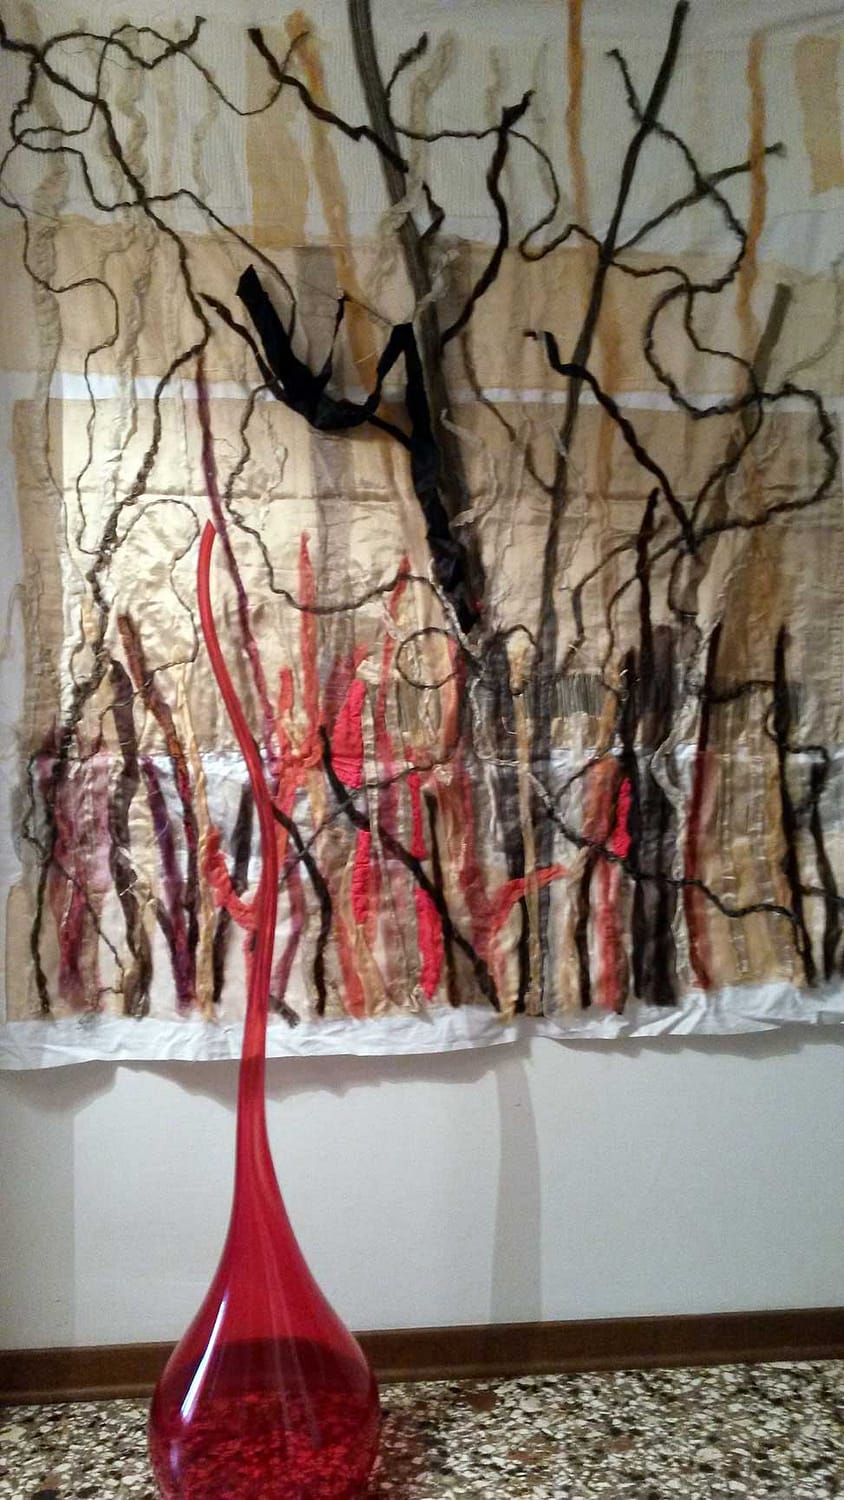 Ritmica textile-art 2015
Denise Gemin
view02